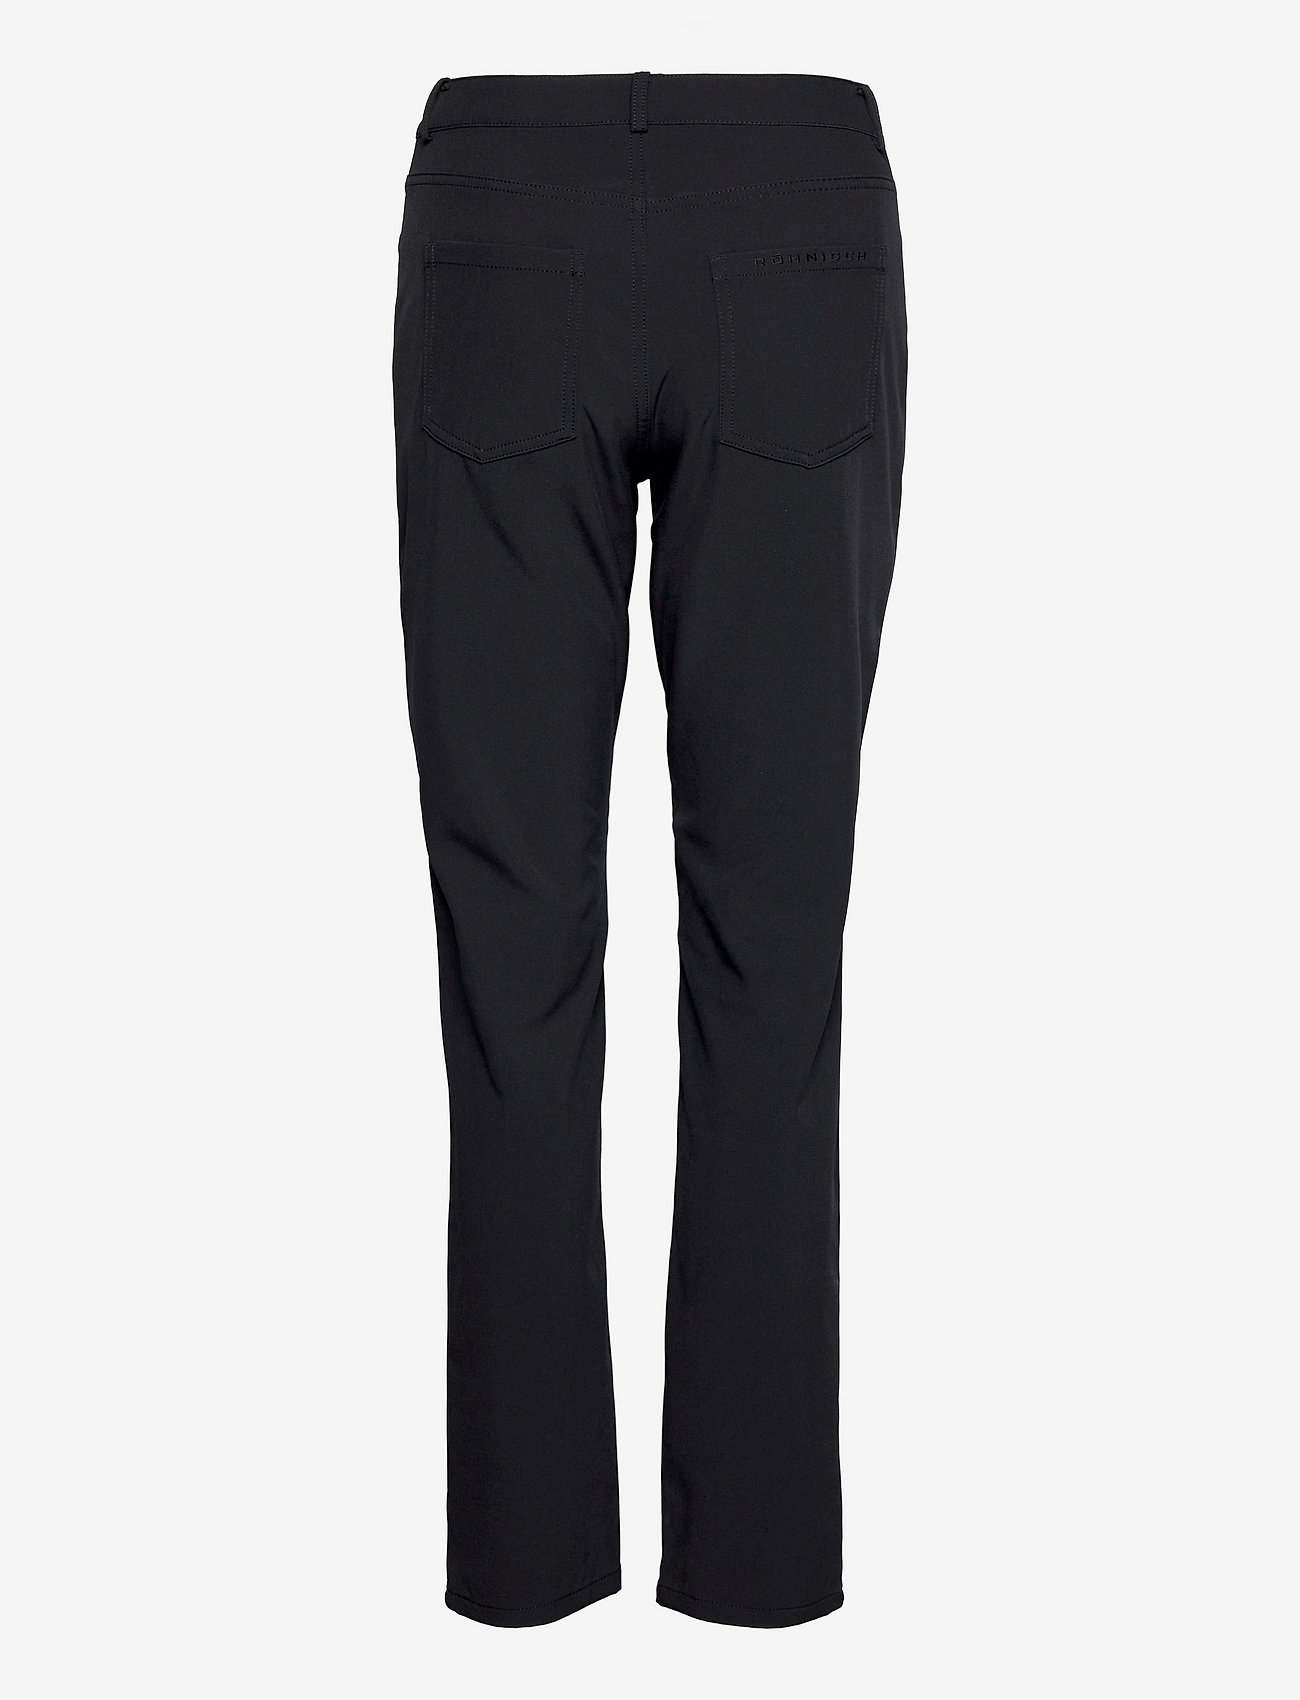 Röhnisch - Insulate pants 32 - spodnie do golfa - black - 1